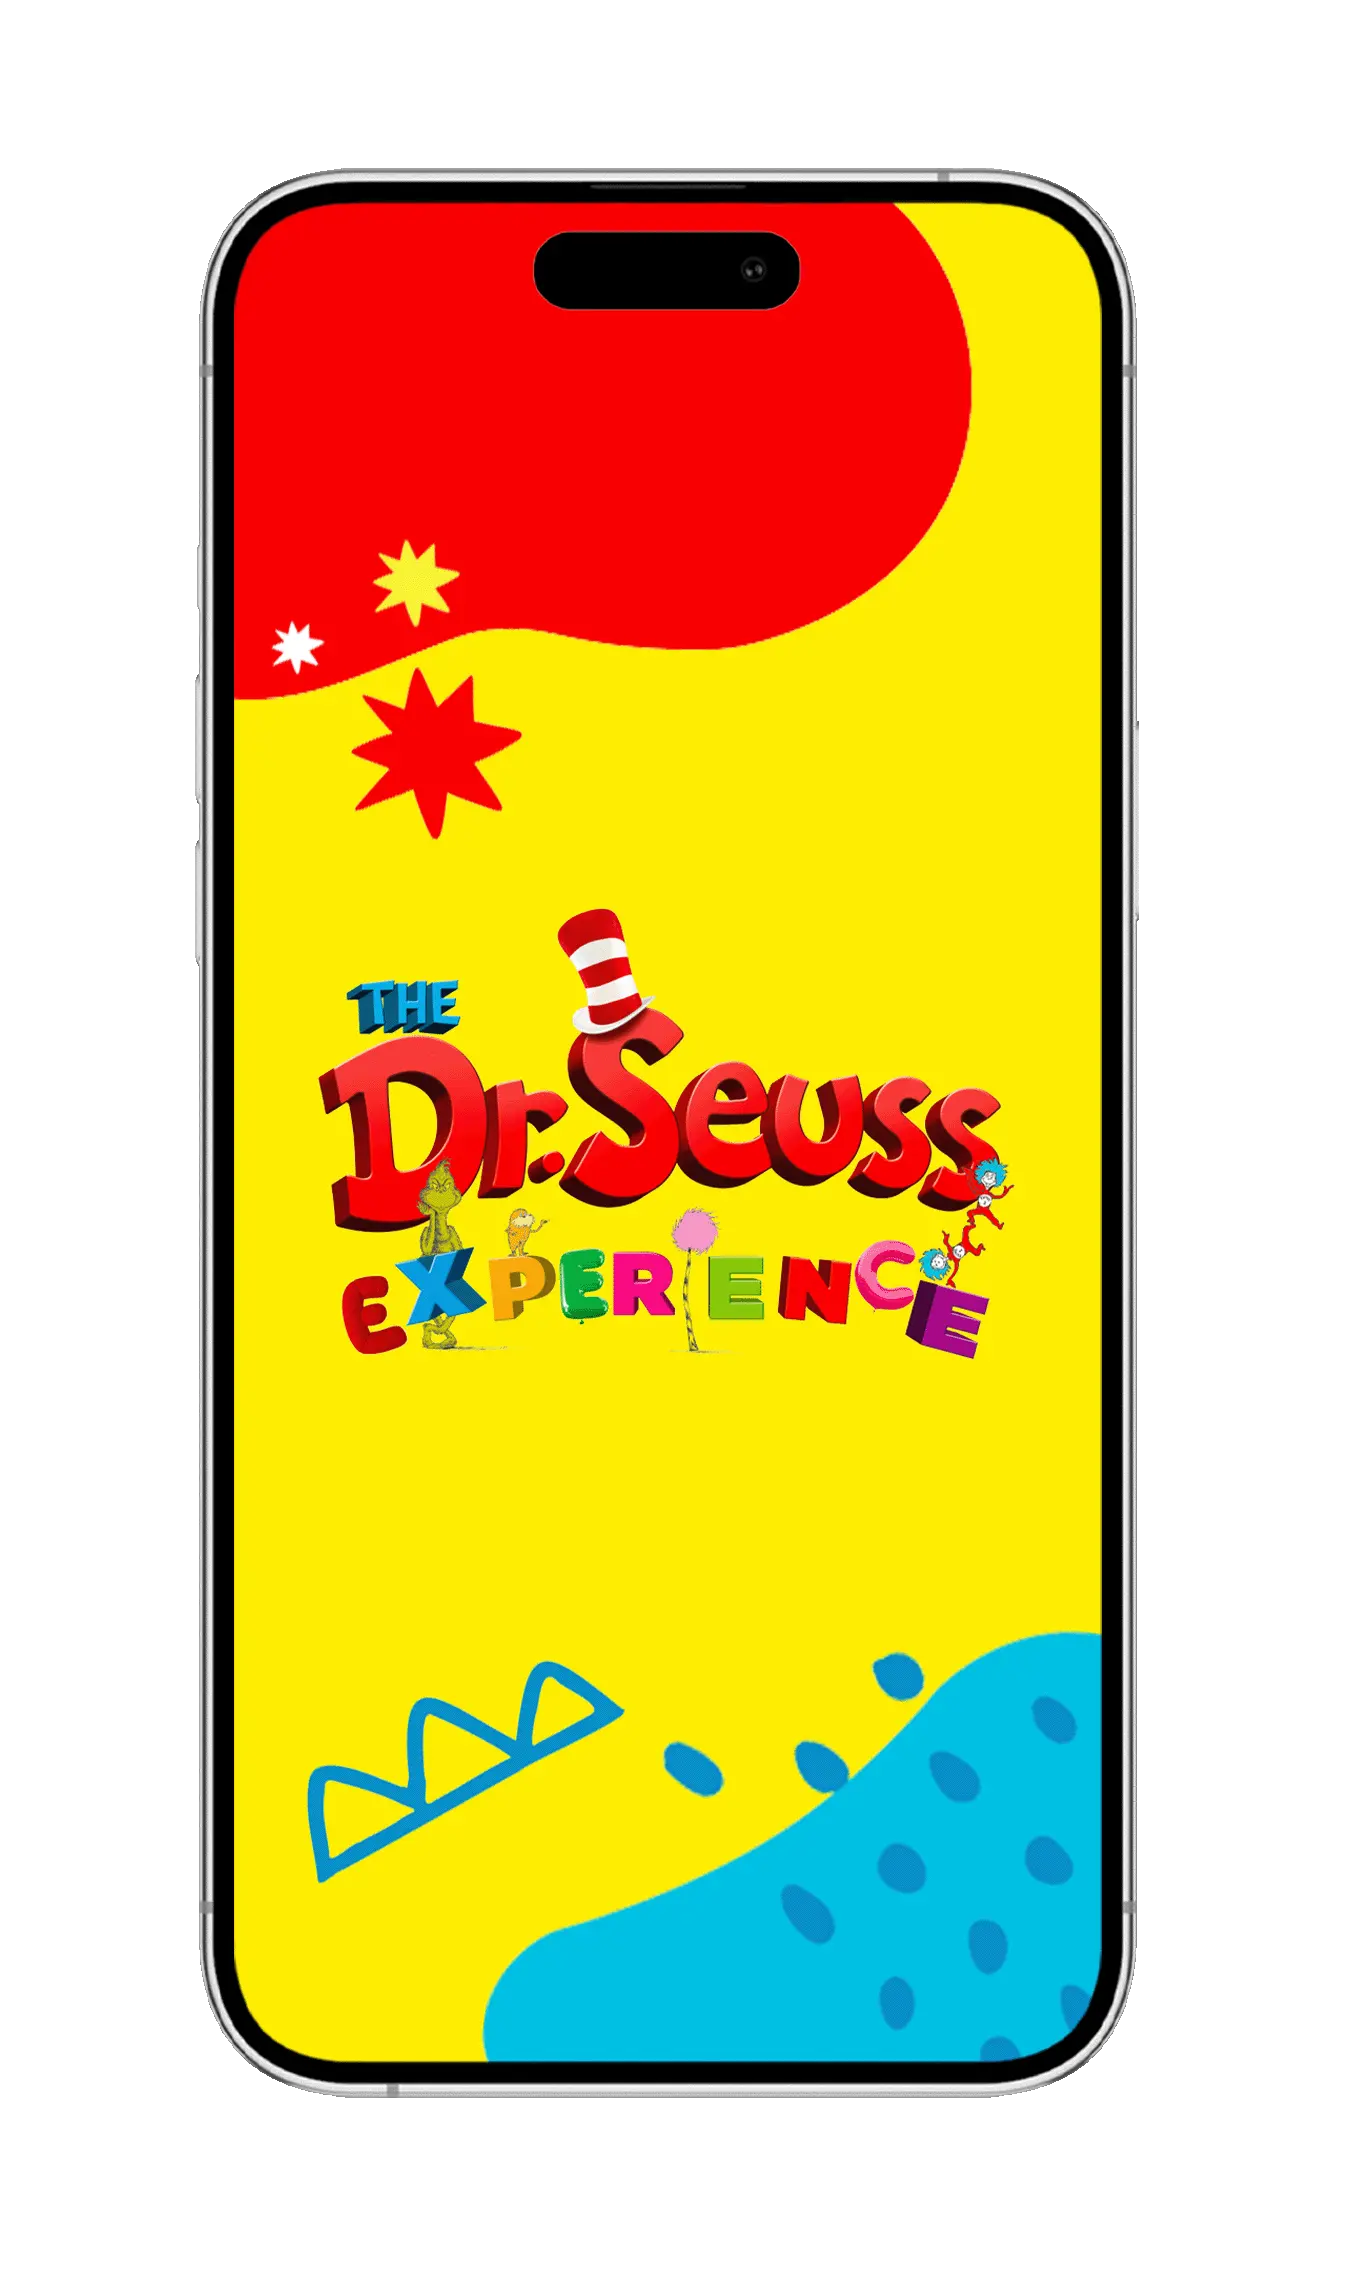 Dr. Seuss Experience App